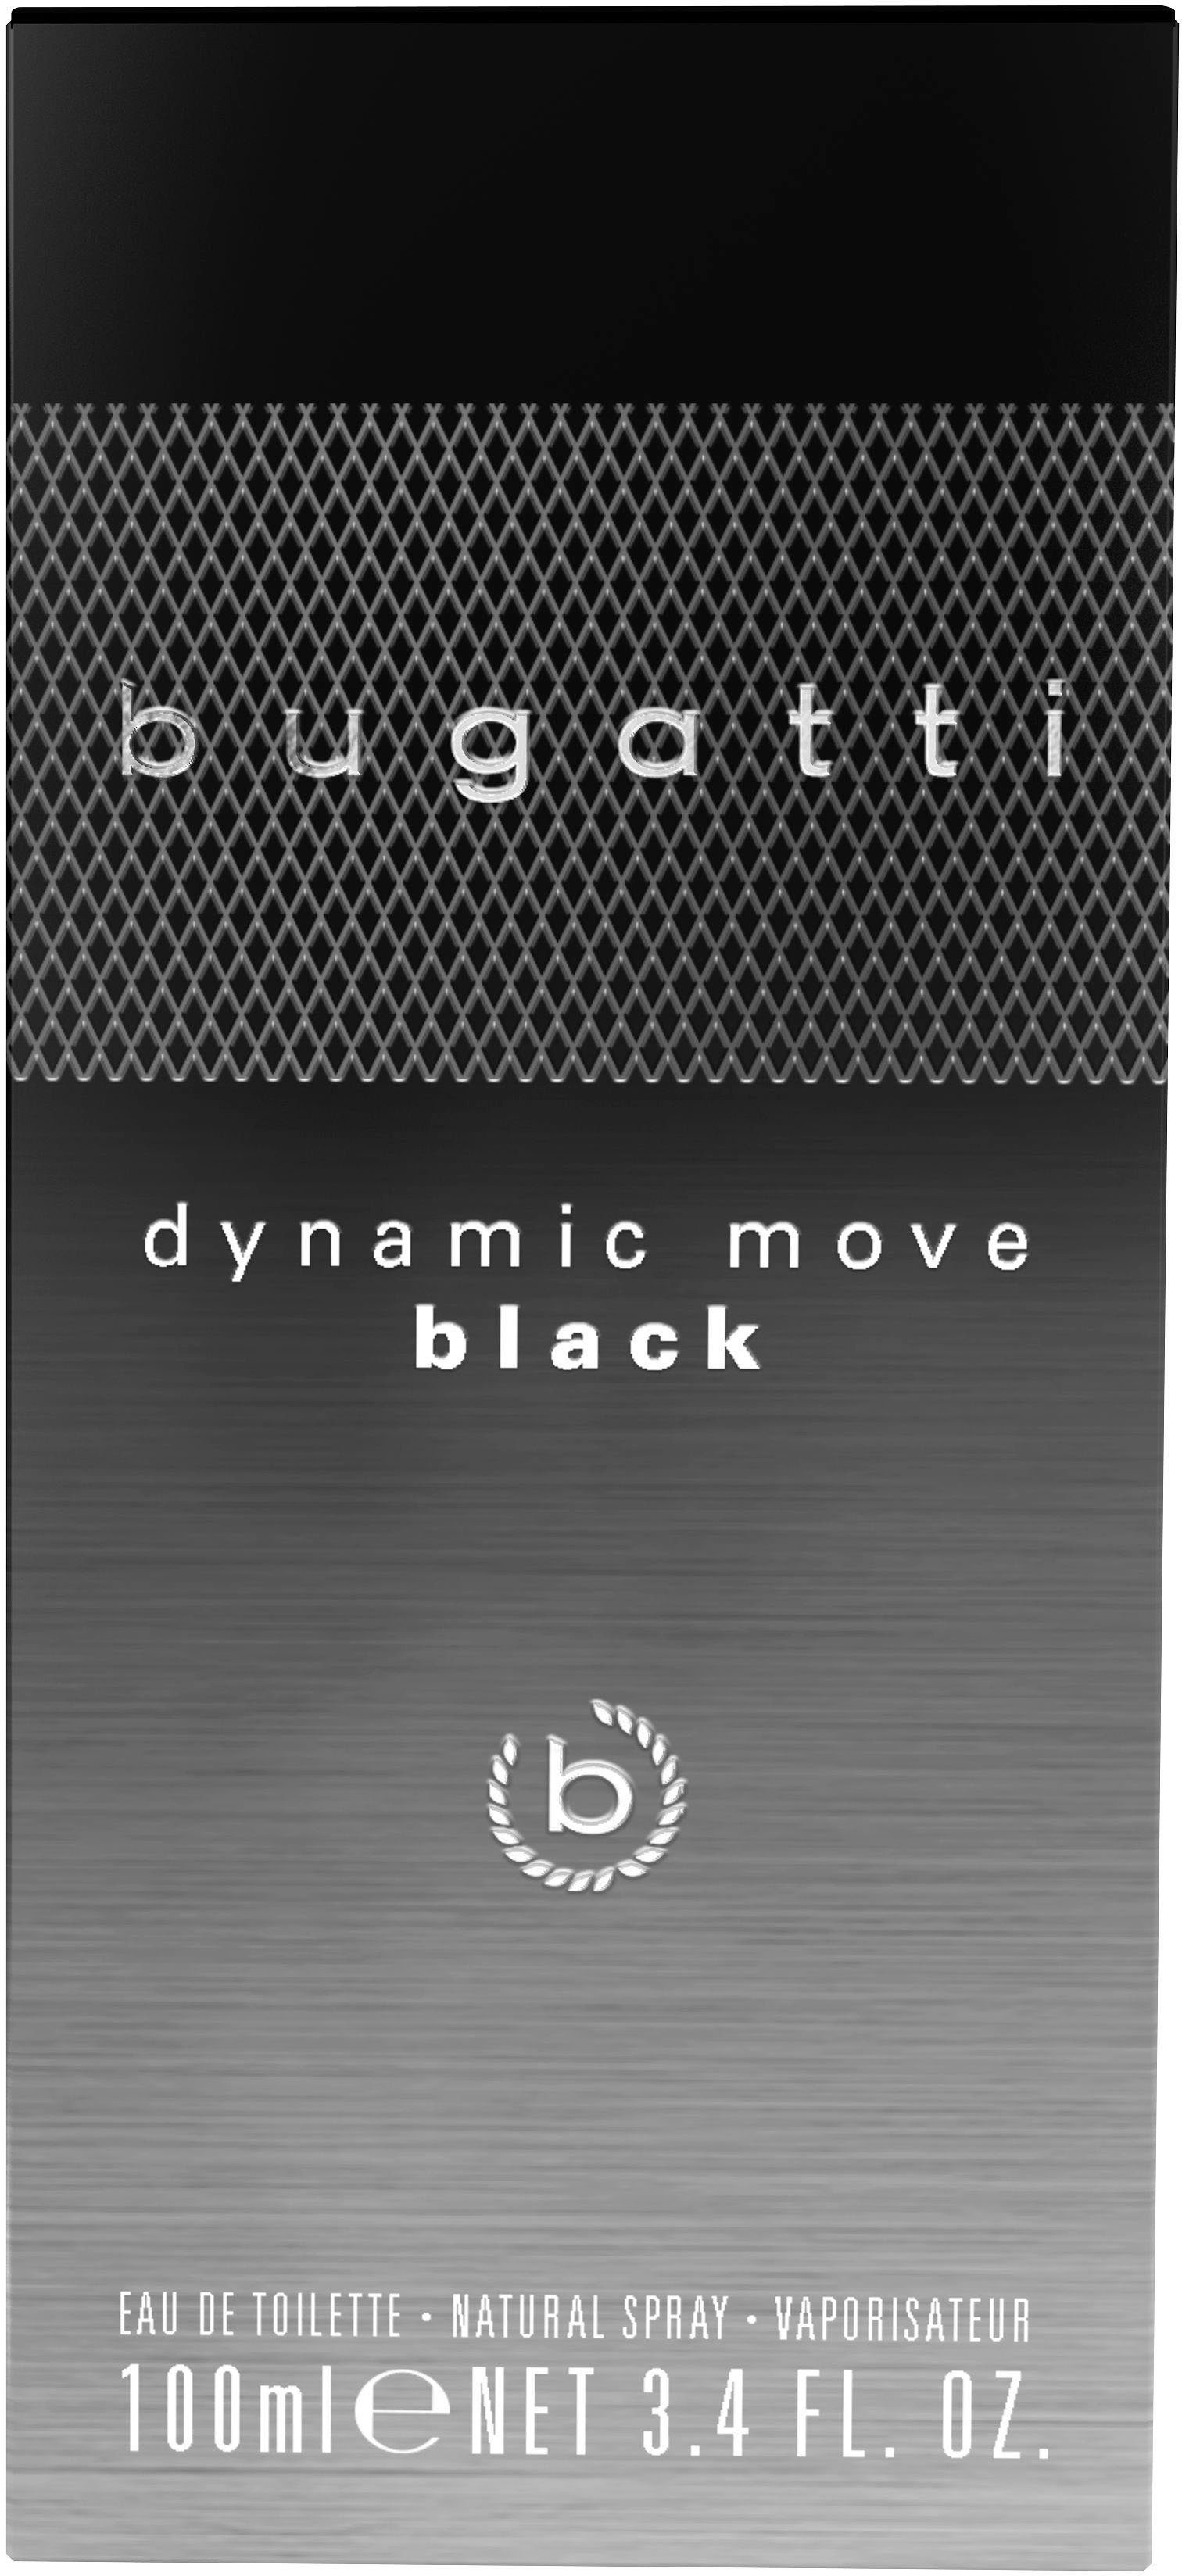 Black 100ml de Eau Toilette Dynamic EdT bugatti Move